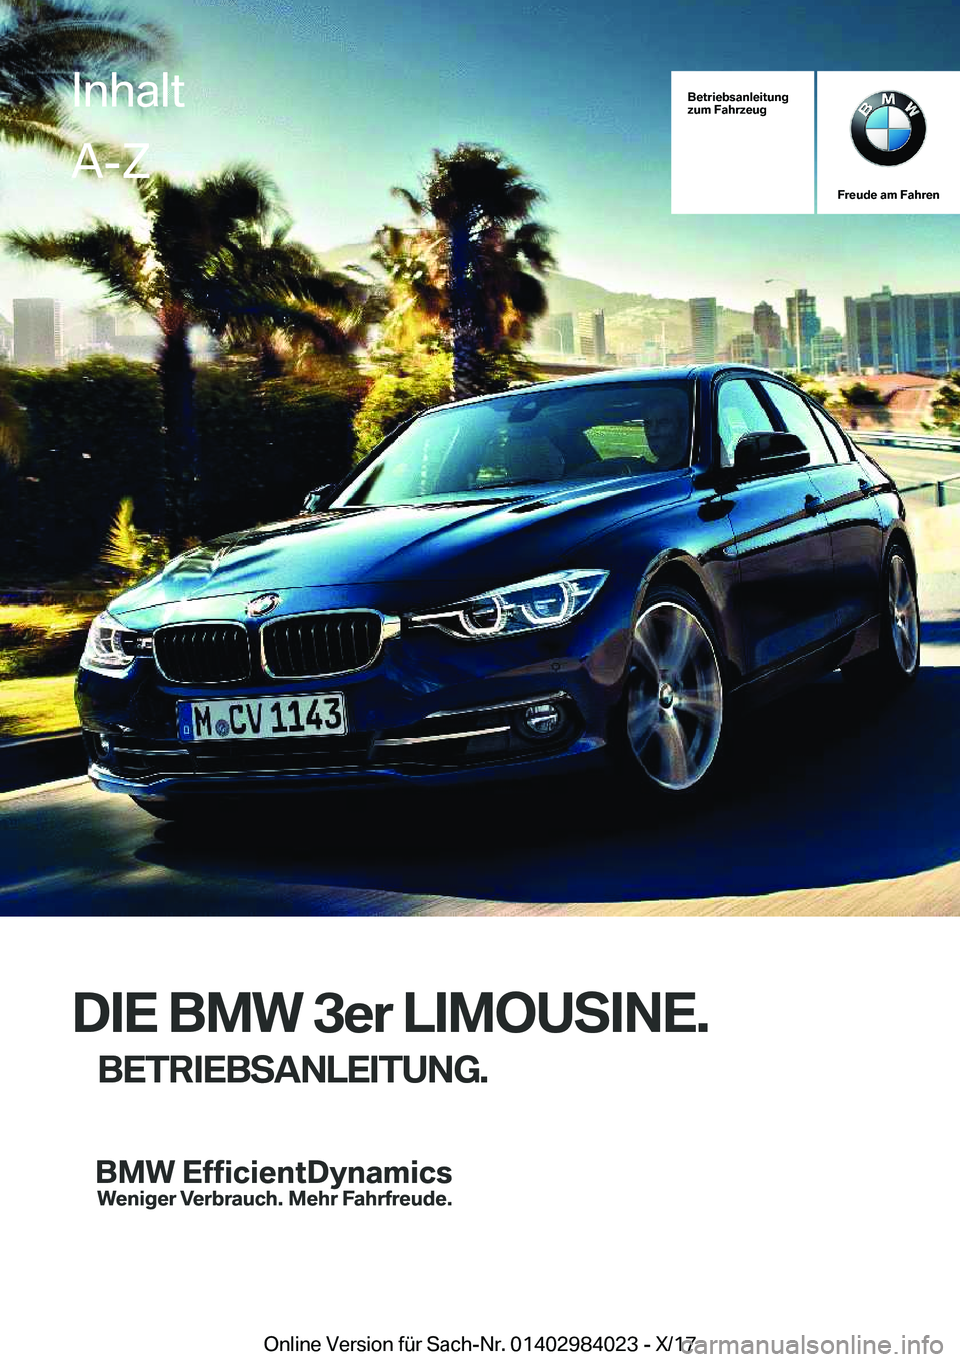 BMW 3 SERIES 2018  Betriebsanleitungen (in German) �B�e�t�r�i�e�b�s�a�n�l�e�i�t�u�n�g
�z�u�m��F�a�h�r�z�e�u�g
�F�r�e�u�d�e��a�m��F�a�h�r�e�n
�D�I�E��B�M�W��3�e�r��L�I�M�O�U�S�I�N�E�.
�B�E�T�R�I�E�B�S�A�N�L�E�I�T�U�N�G�.
�I�n�h�a�l�t�A�-�Z
�O�n�l